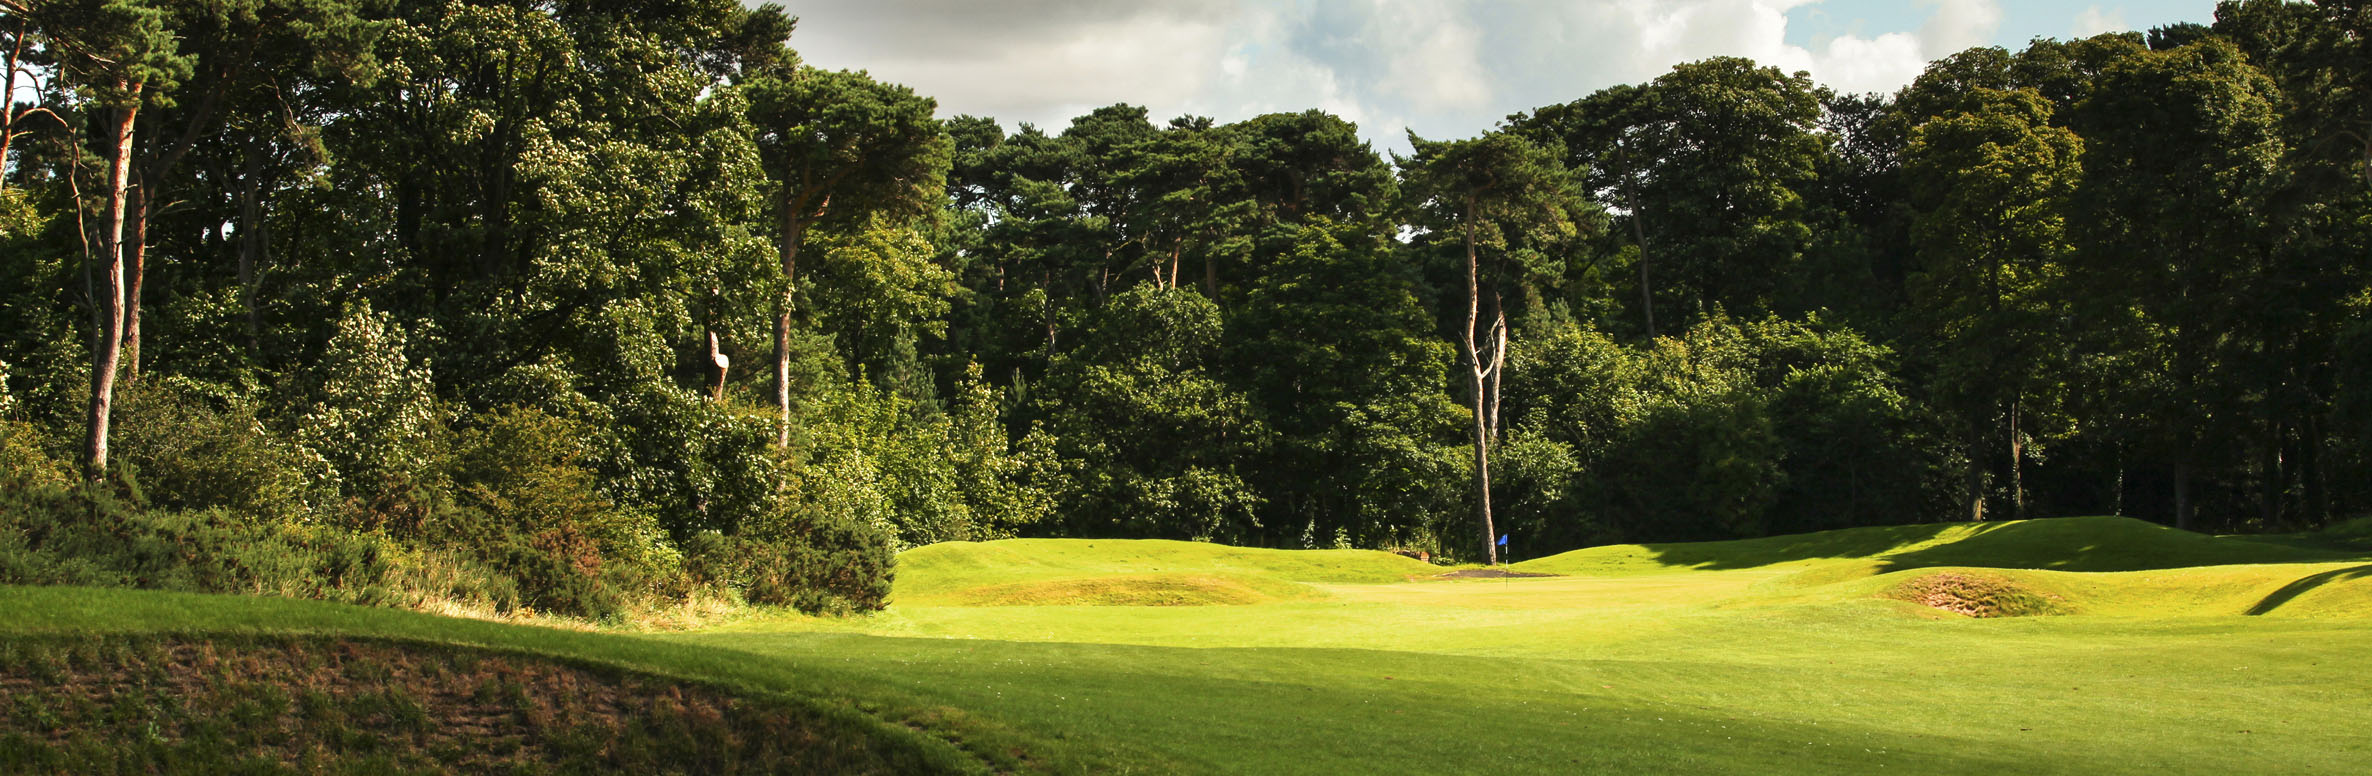 Golf Course Image - Longniddry Golf Club No. 10